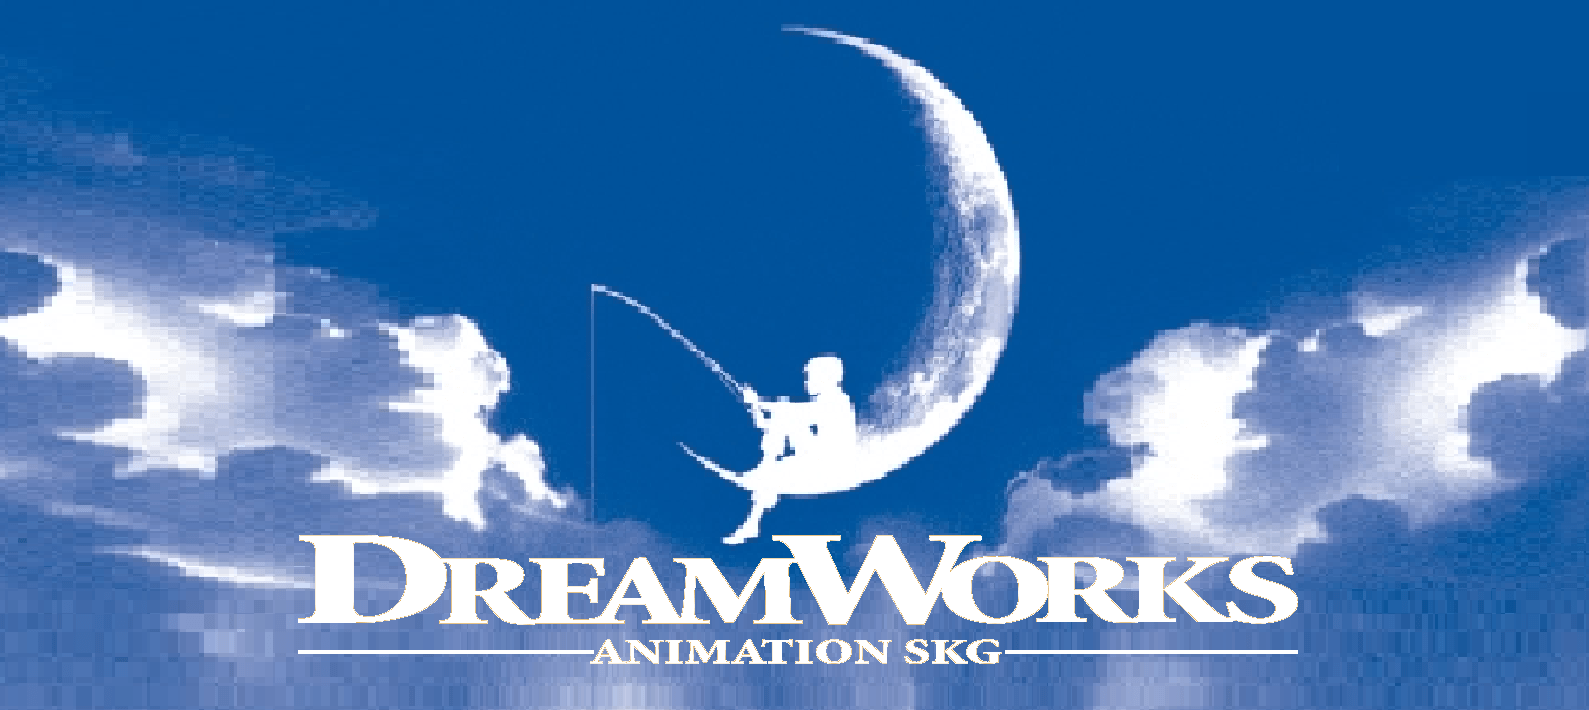 New DreamWorks Logo - Image - DreamWorks Animation new print logo 1.png | The Idea Wiki ...